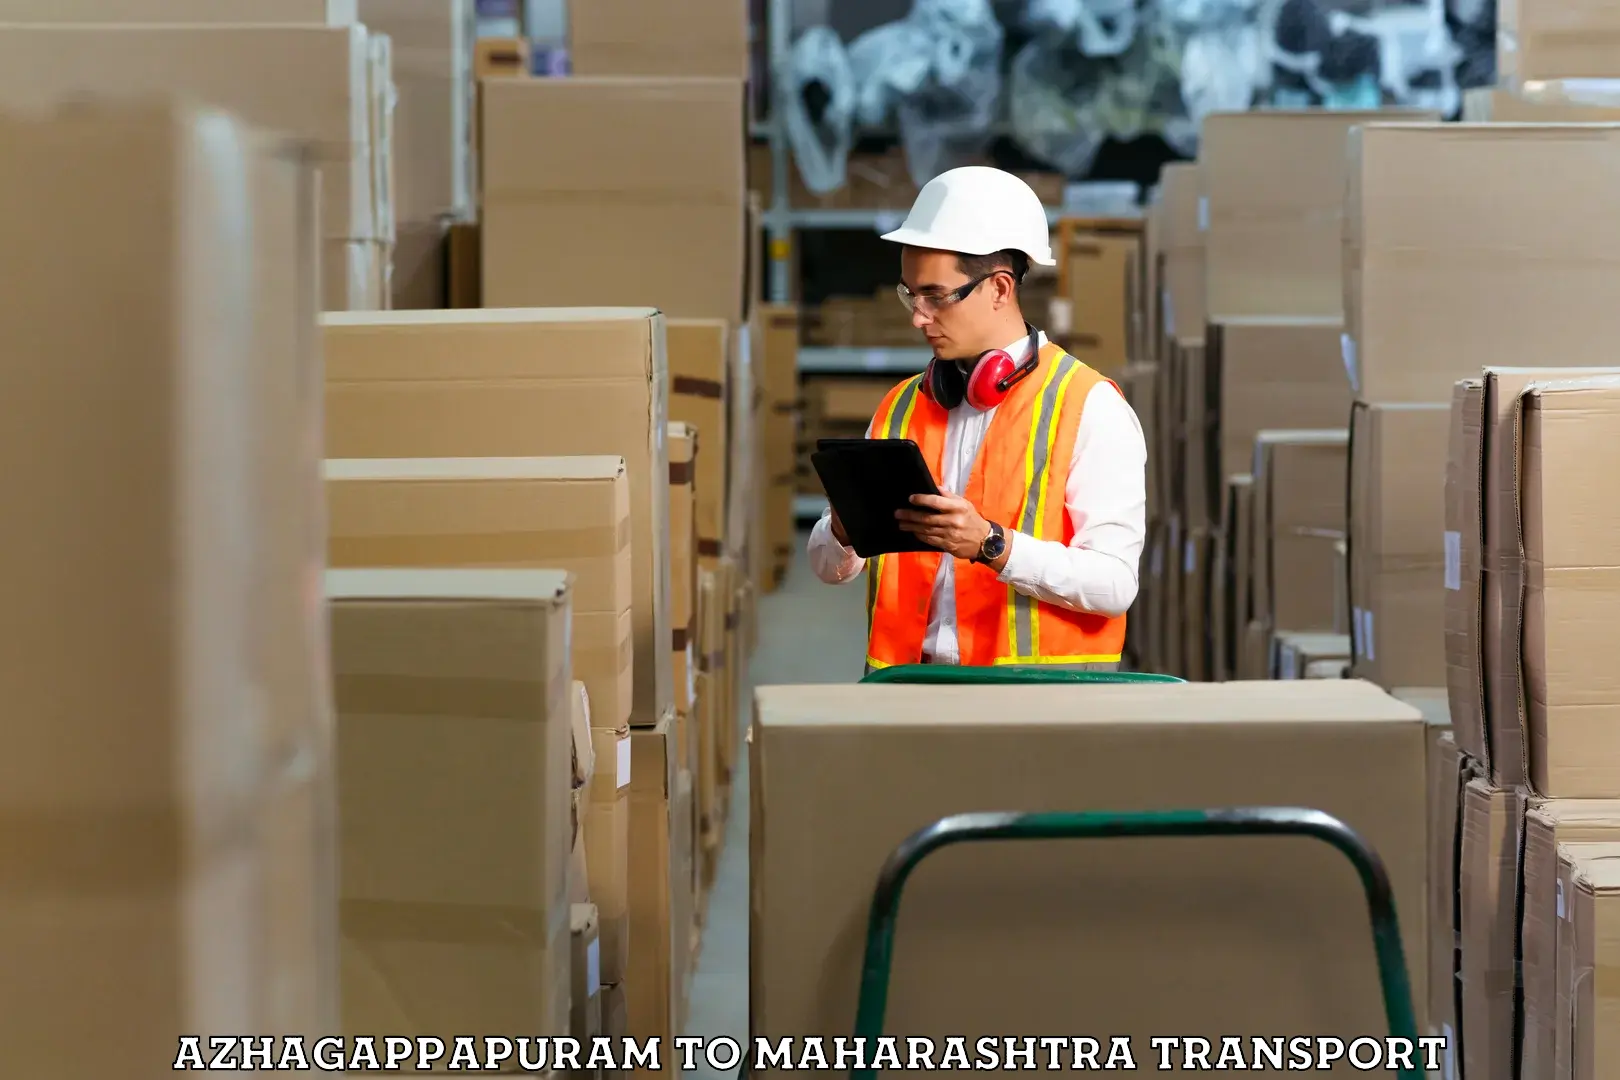 Furniture transport service Azhagappapuram to Sironcha